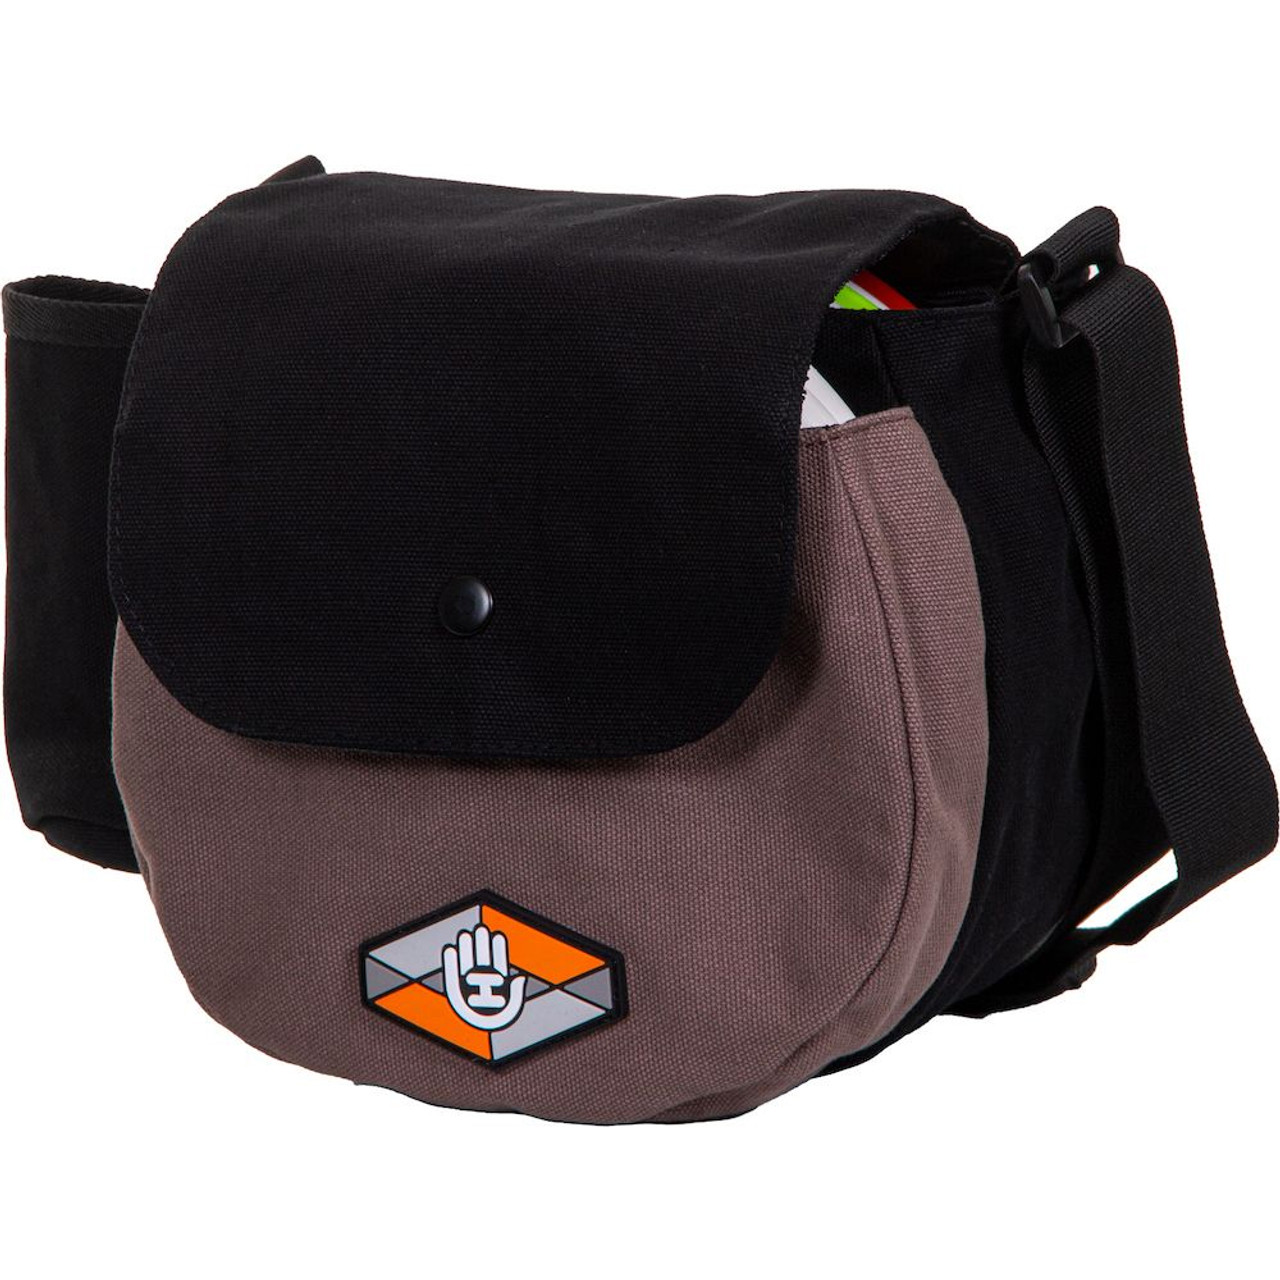 Handeye Disc Golf Bindle Bag Journeyman - Holds 12+ Discs - TGM Skateboards